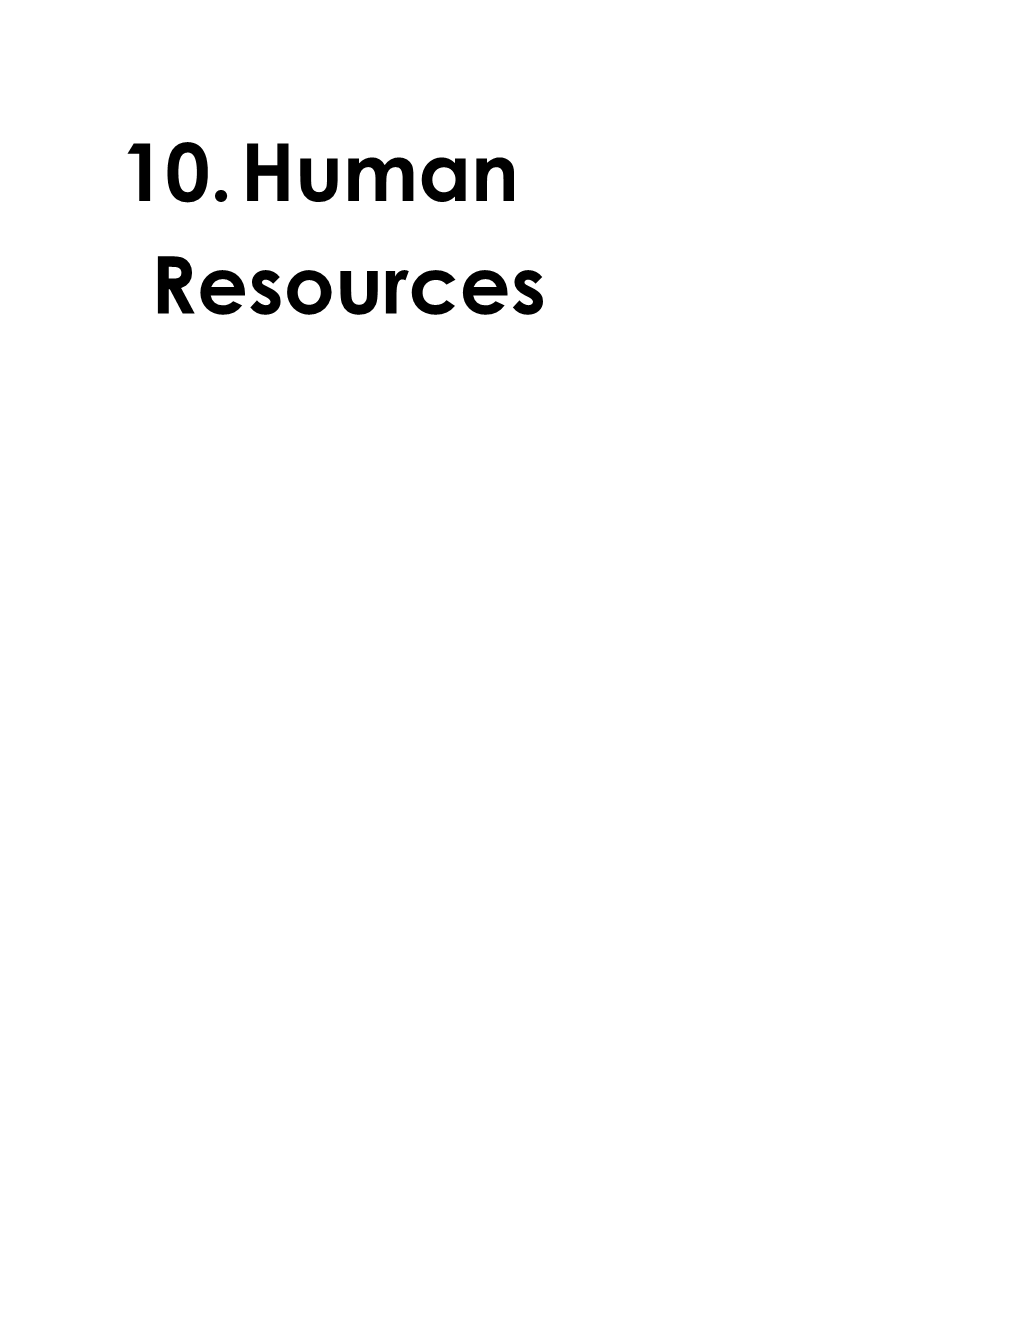 10. Human Resources